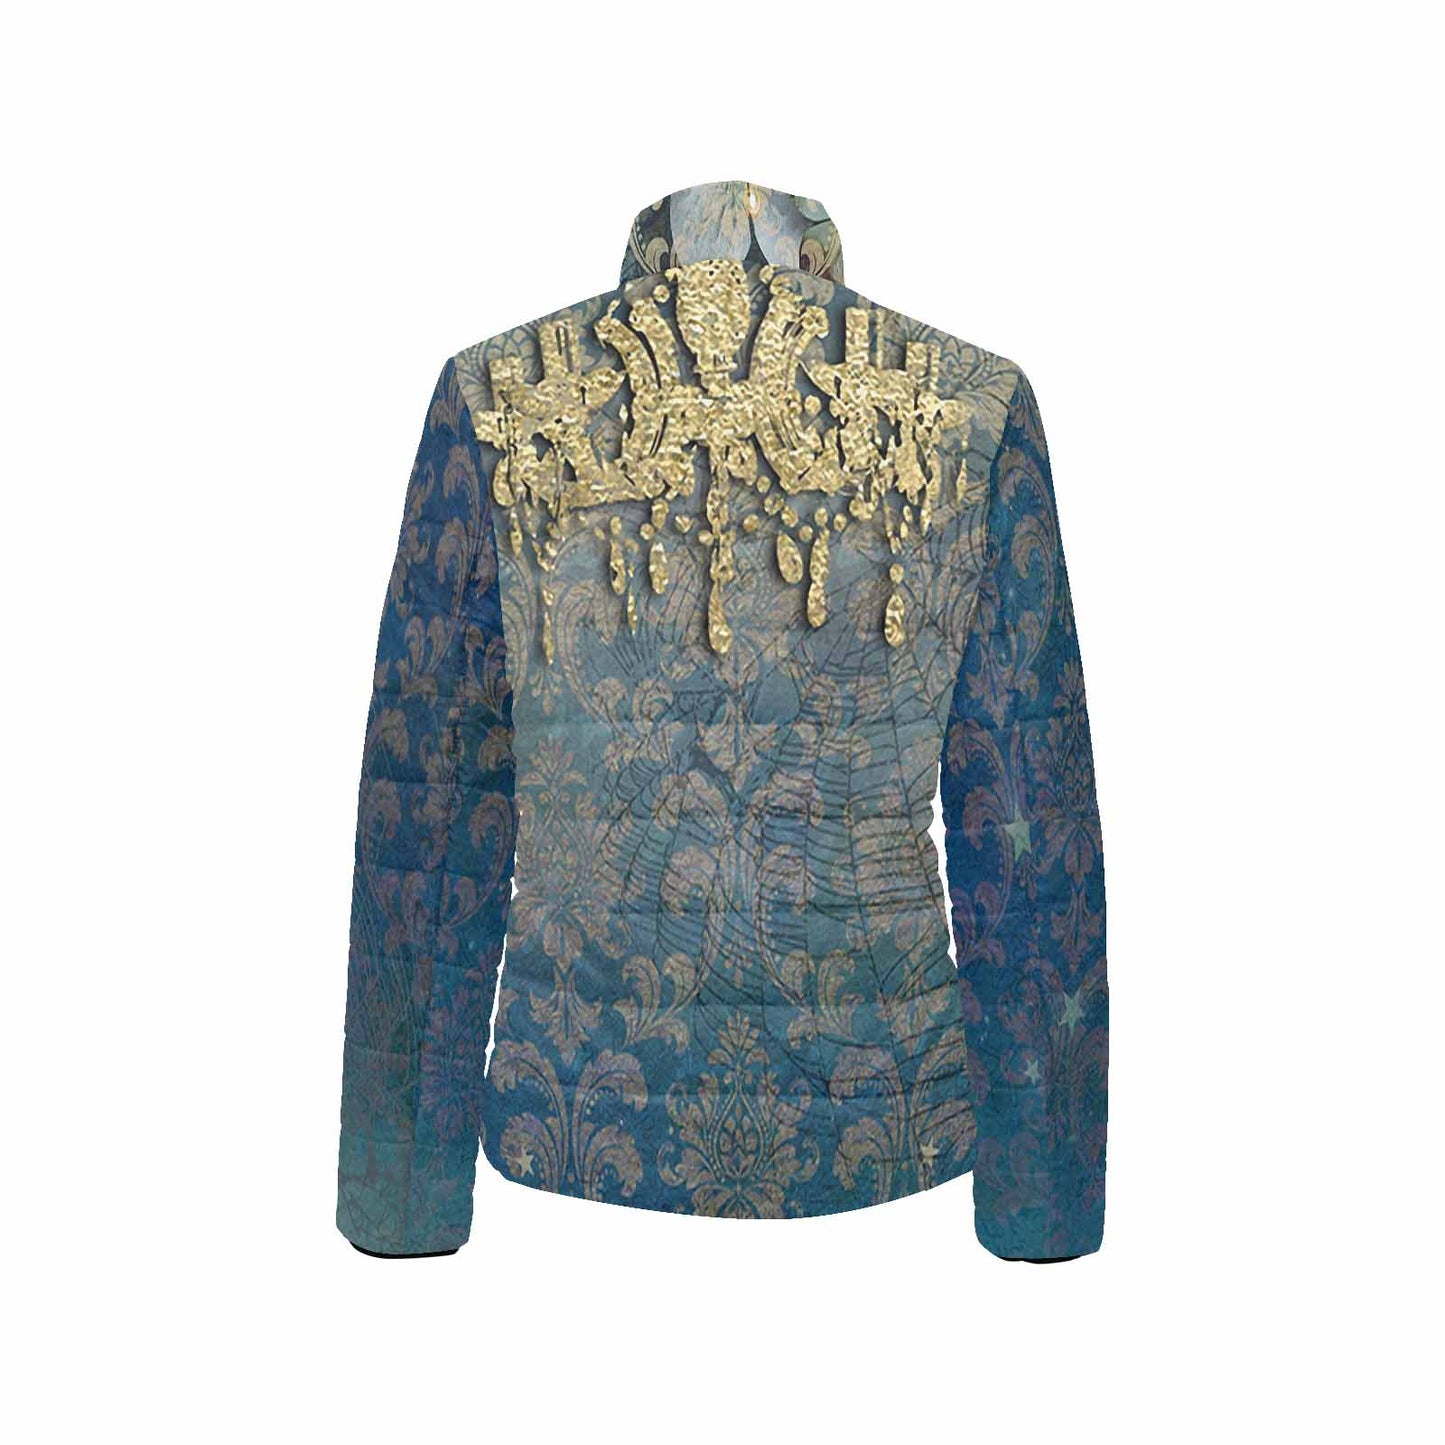 Antique general print quilted jacket, design 10